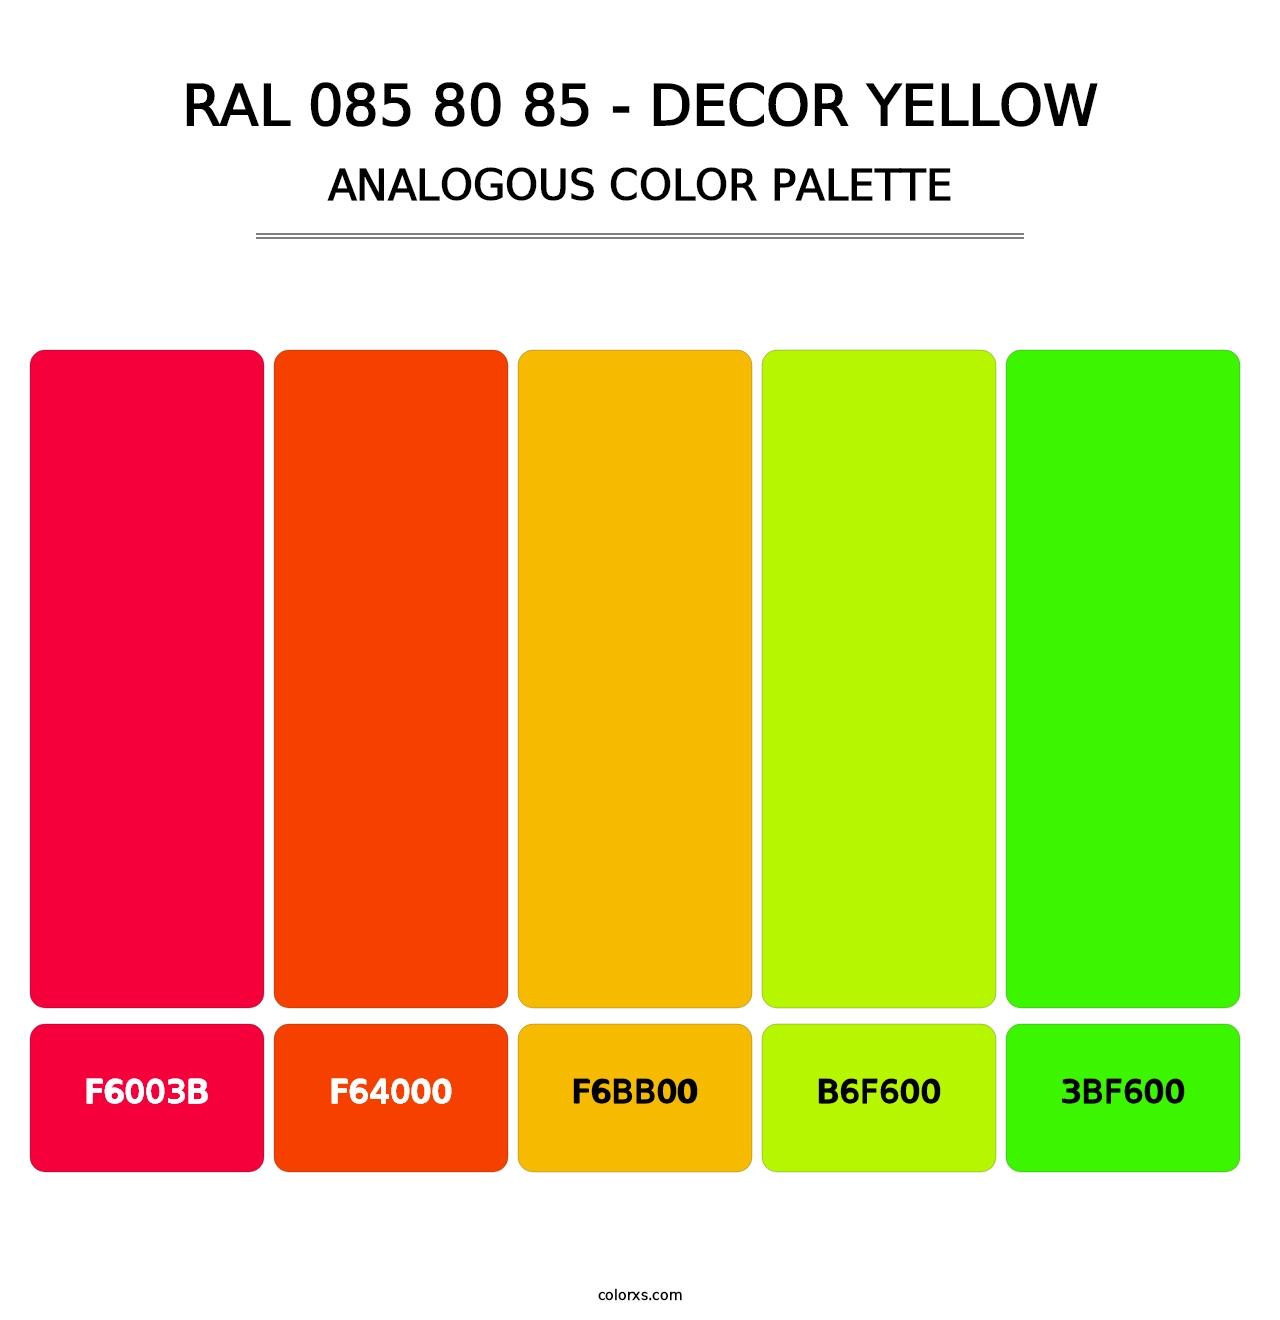 RAL 085 80 85 - Decor Yellow - Analogous Color Palette